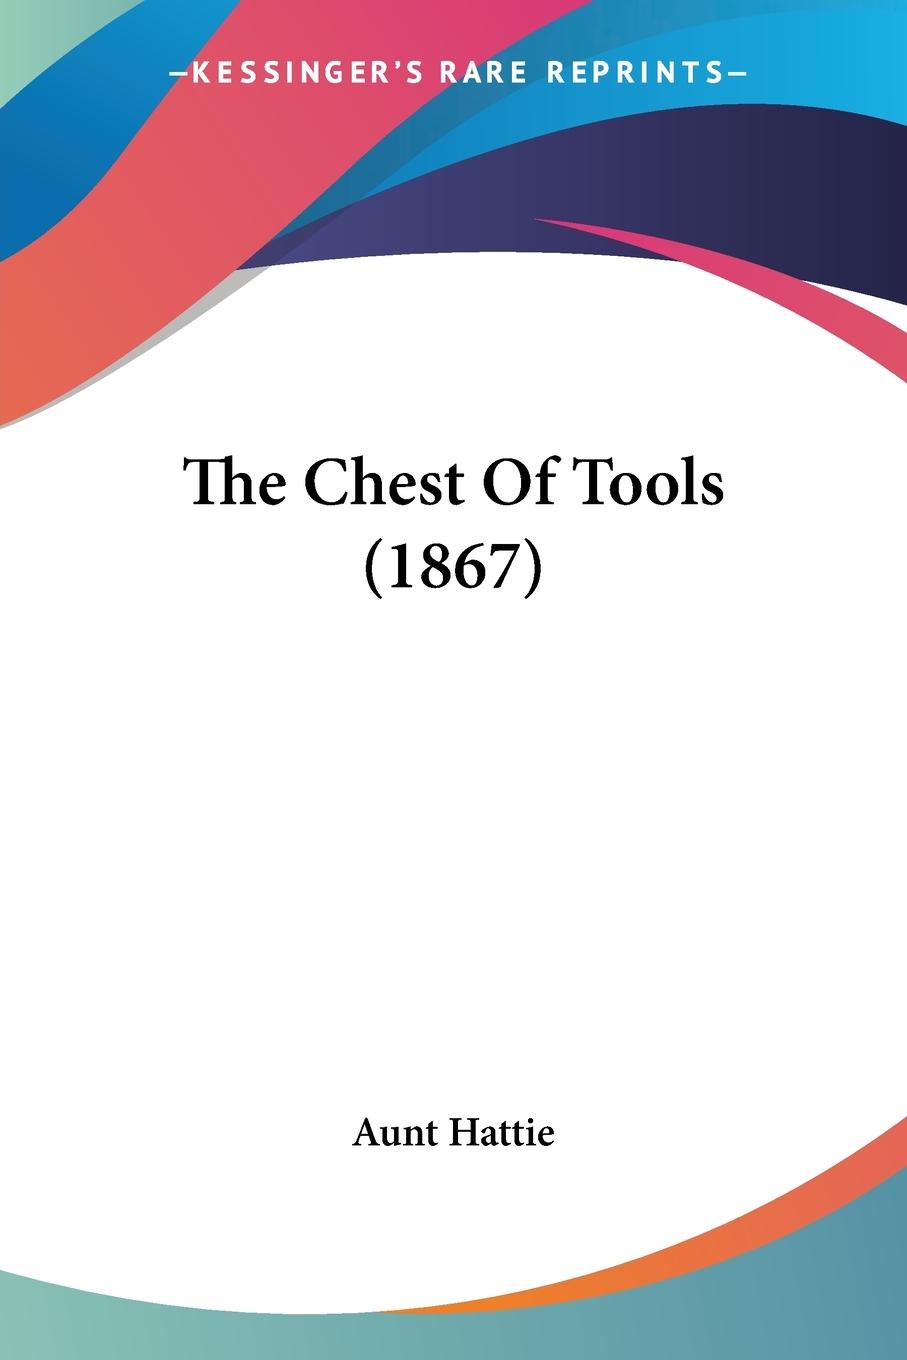 The Chest Of Tools (1867) - Aunt Hattie